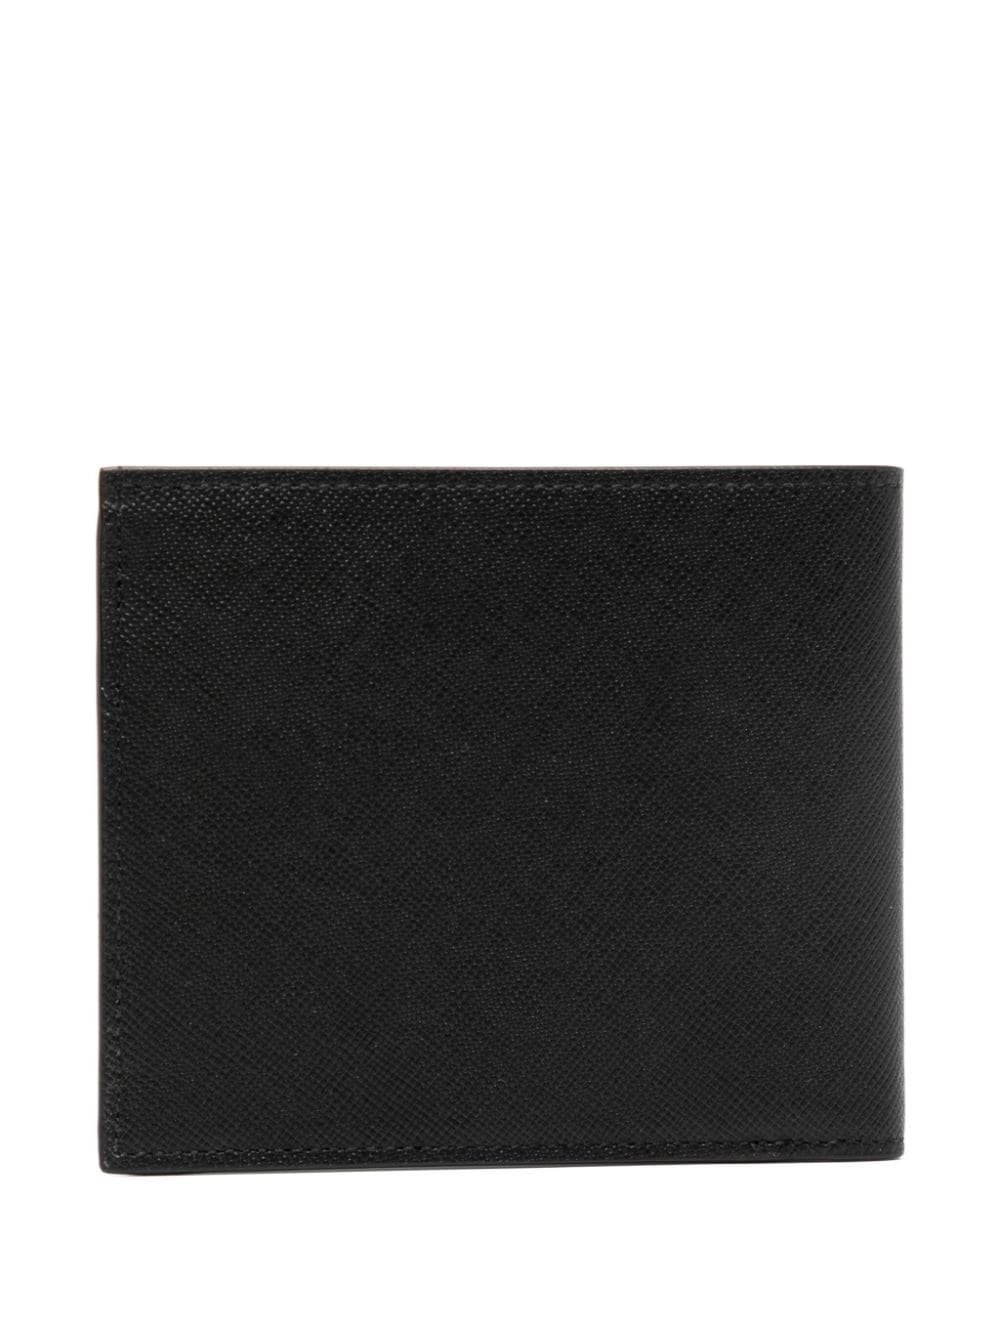 Mini Blur leather wallet - 2